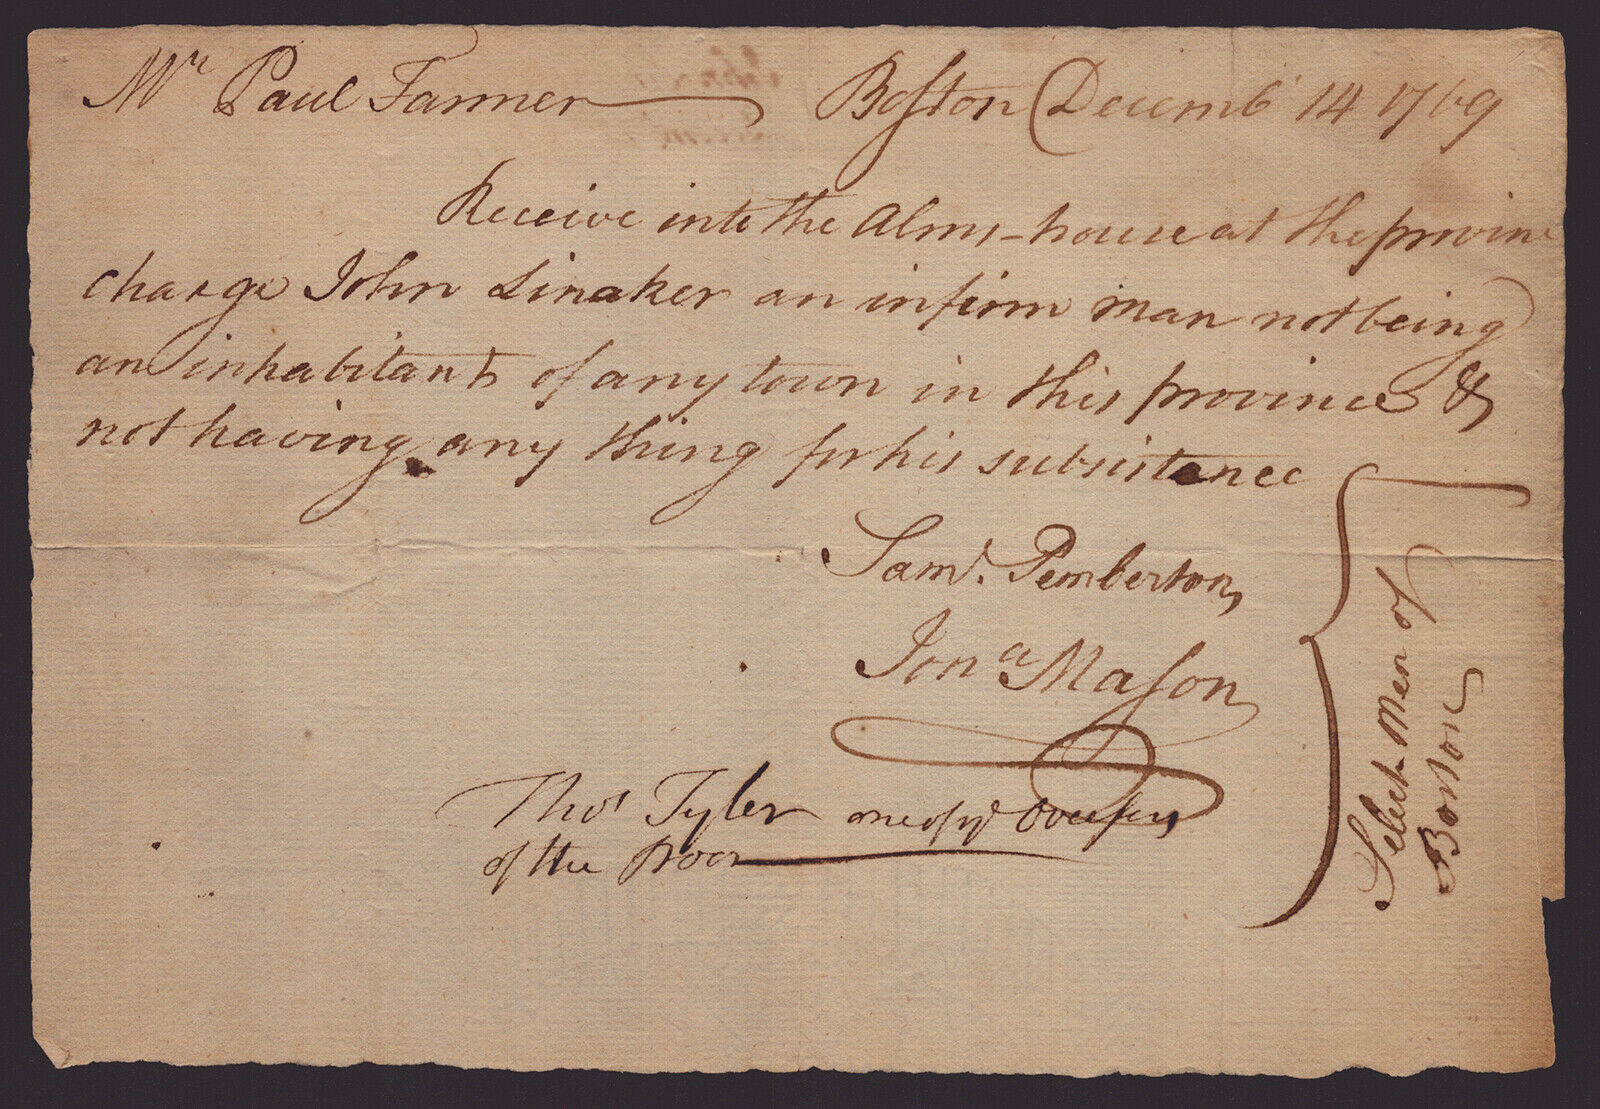 SAMUEL PEMBERTON - MANUSCRIPT DOCUMENT SIGNED 12/14/1769